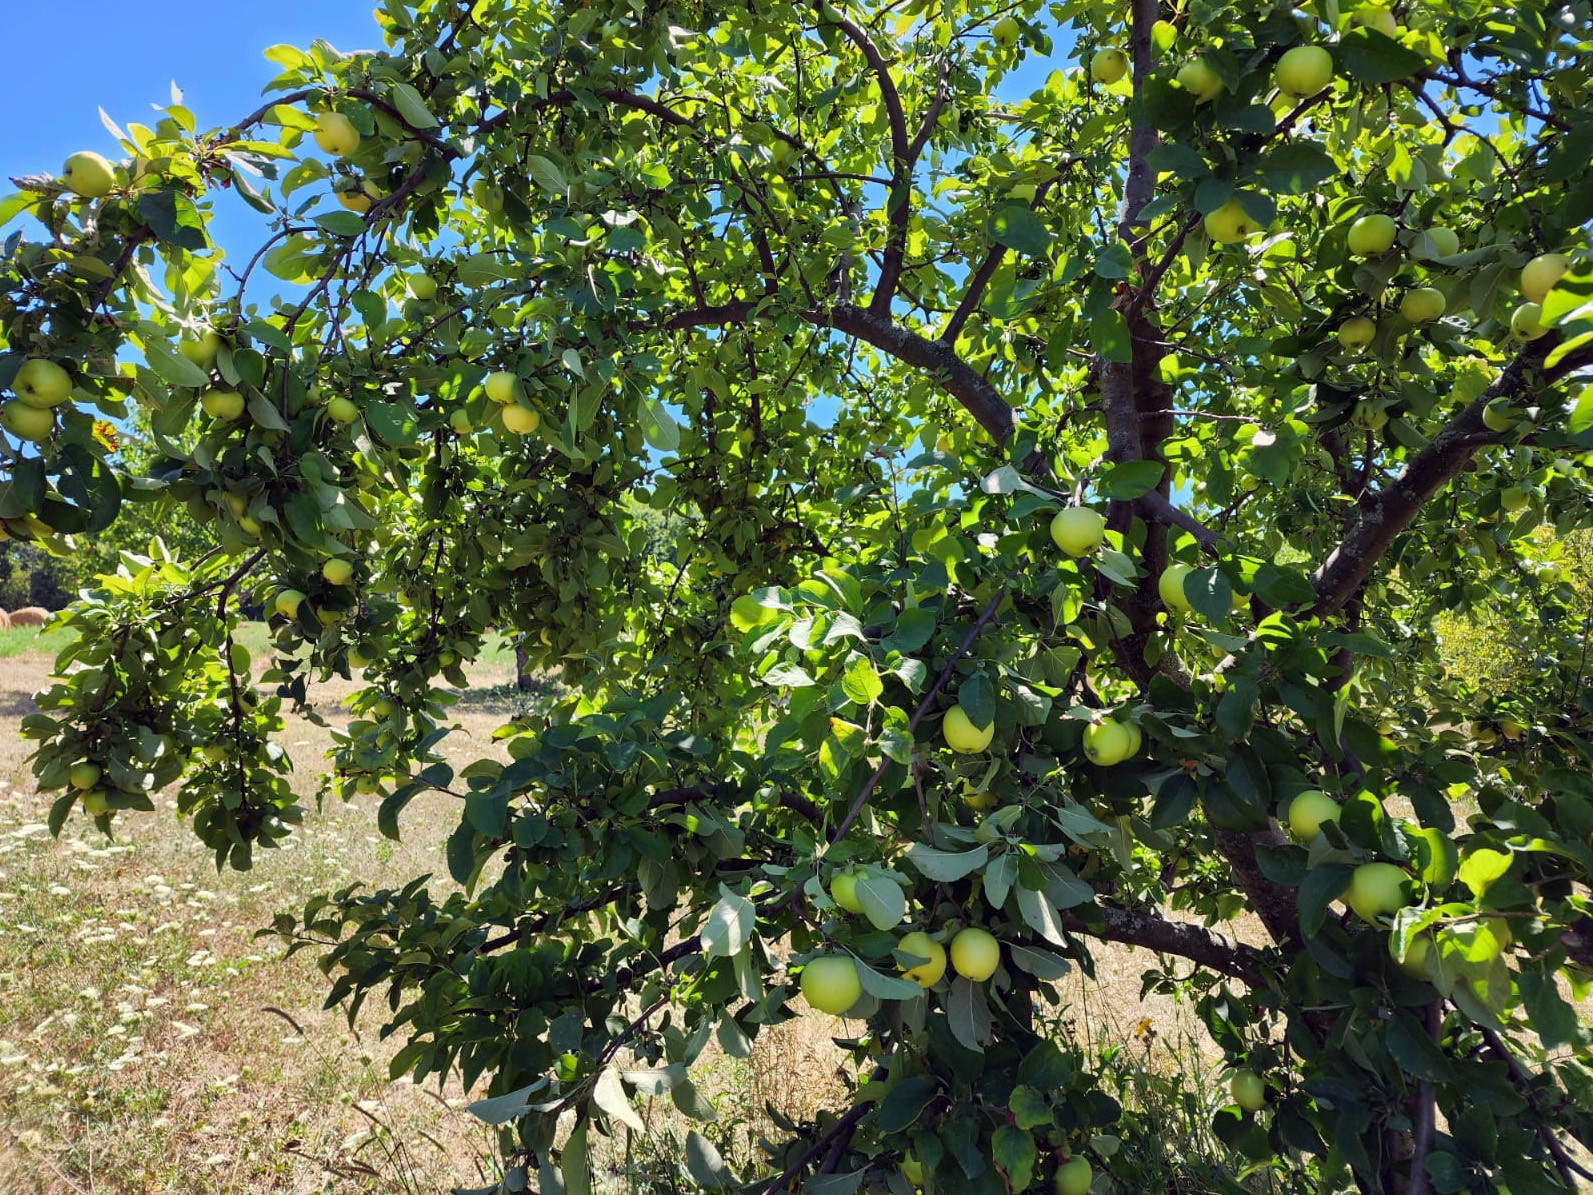 Apples ripening on tree